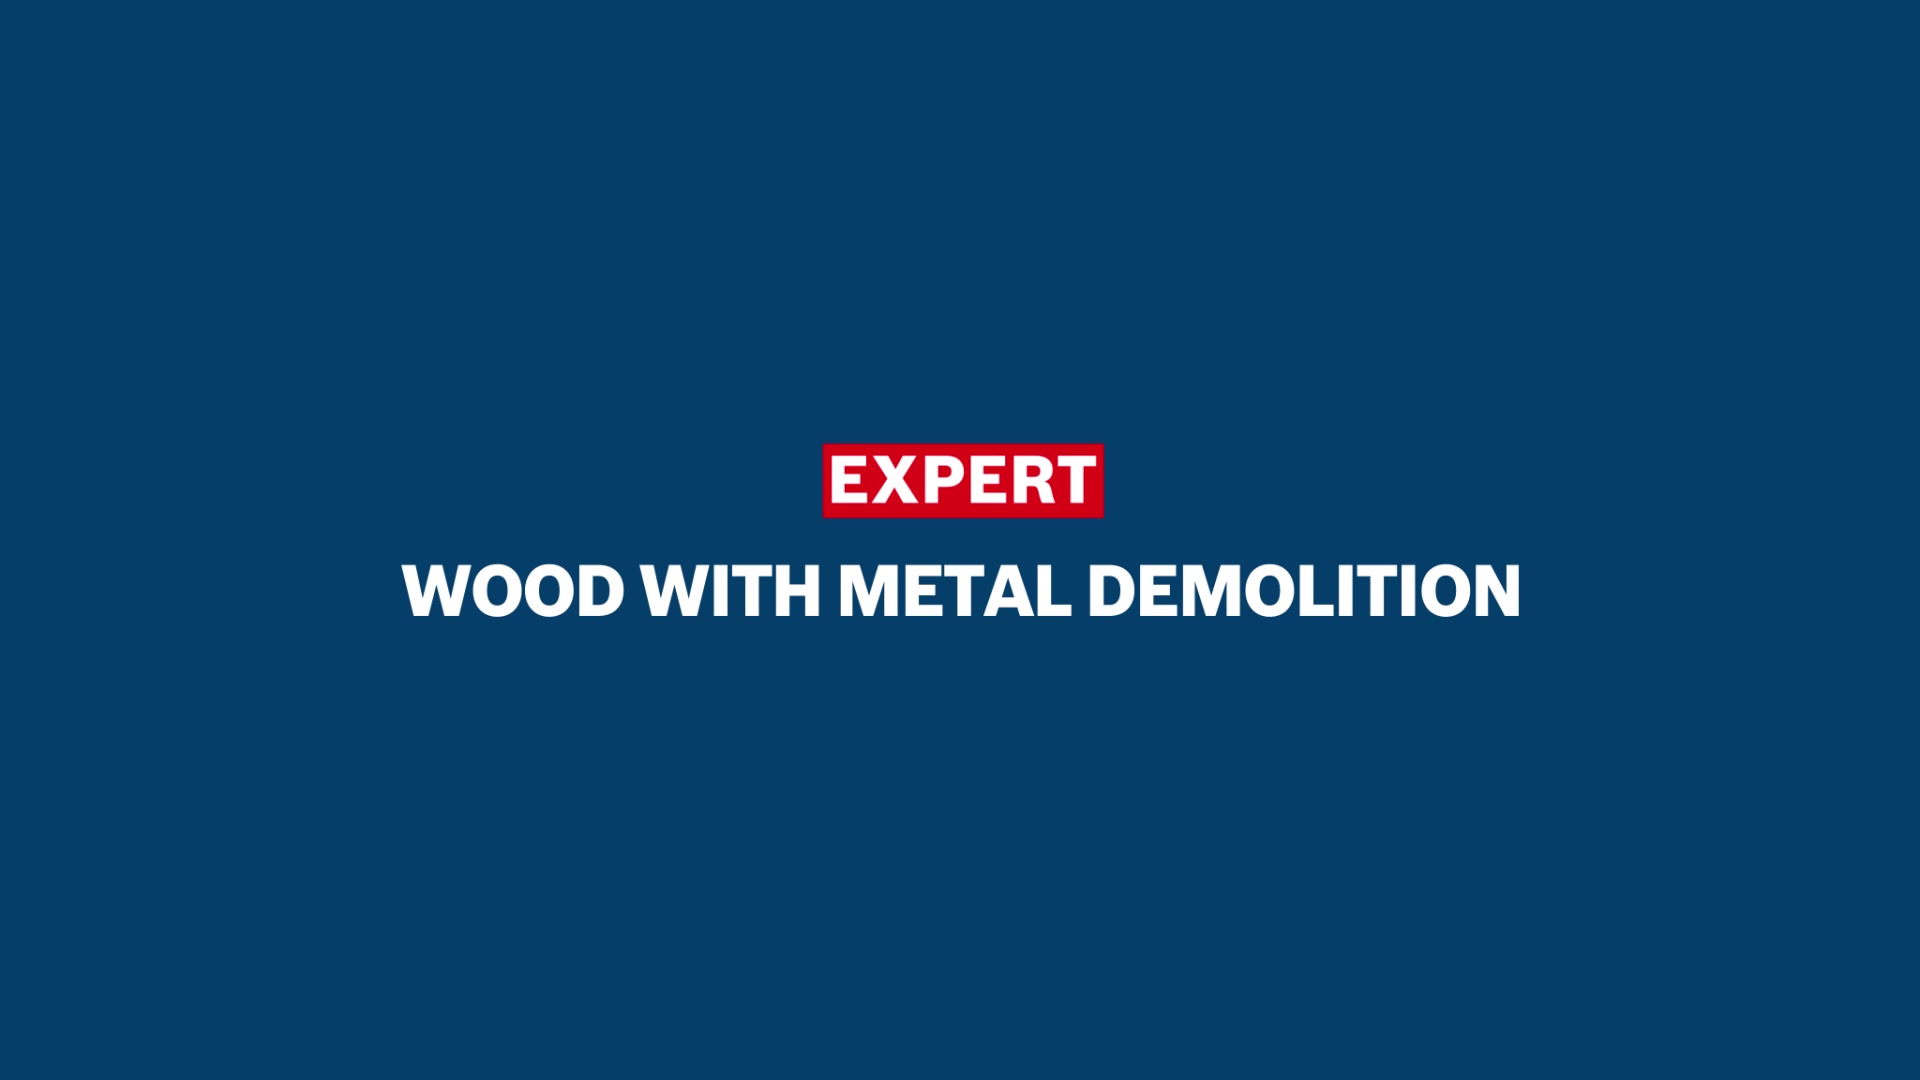 EXPERT ‘Wood with Metal Demolition’